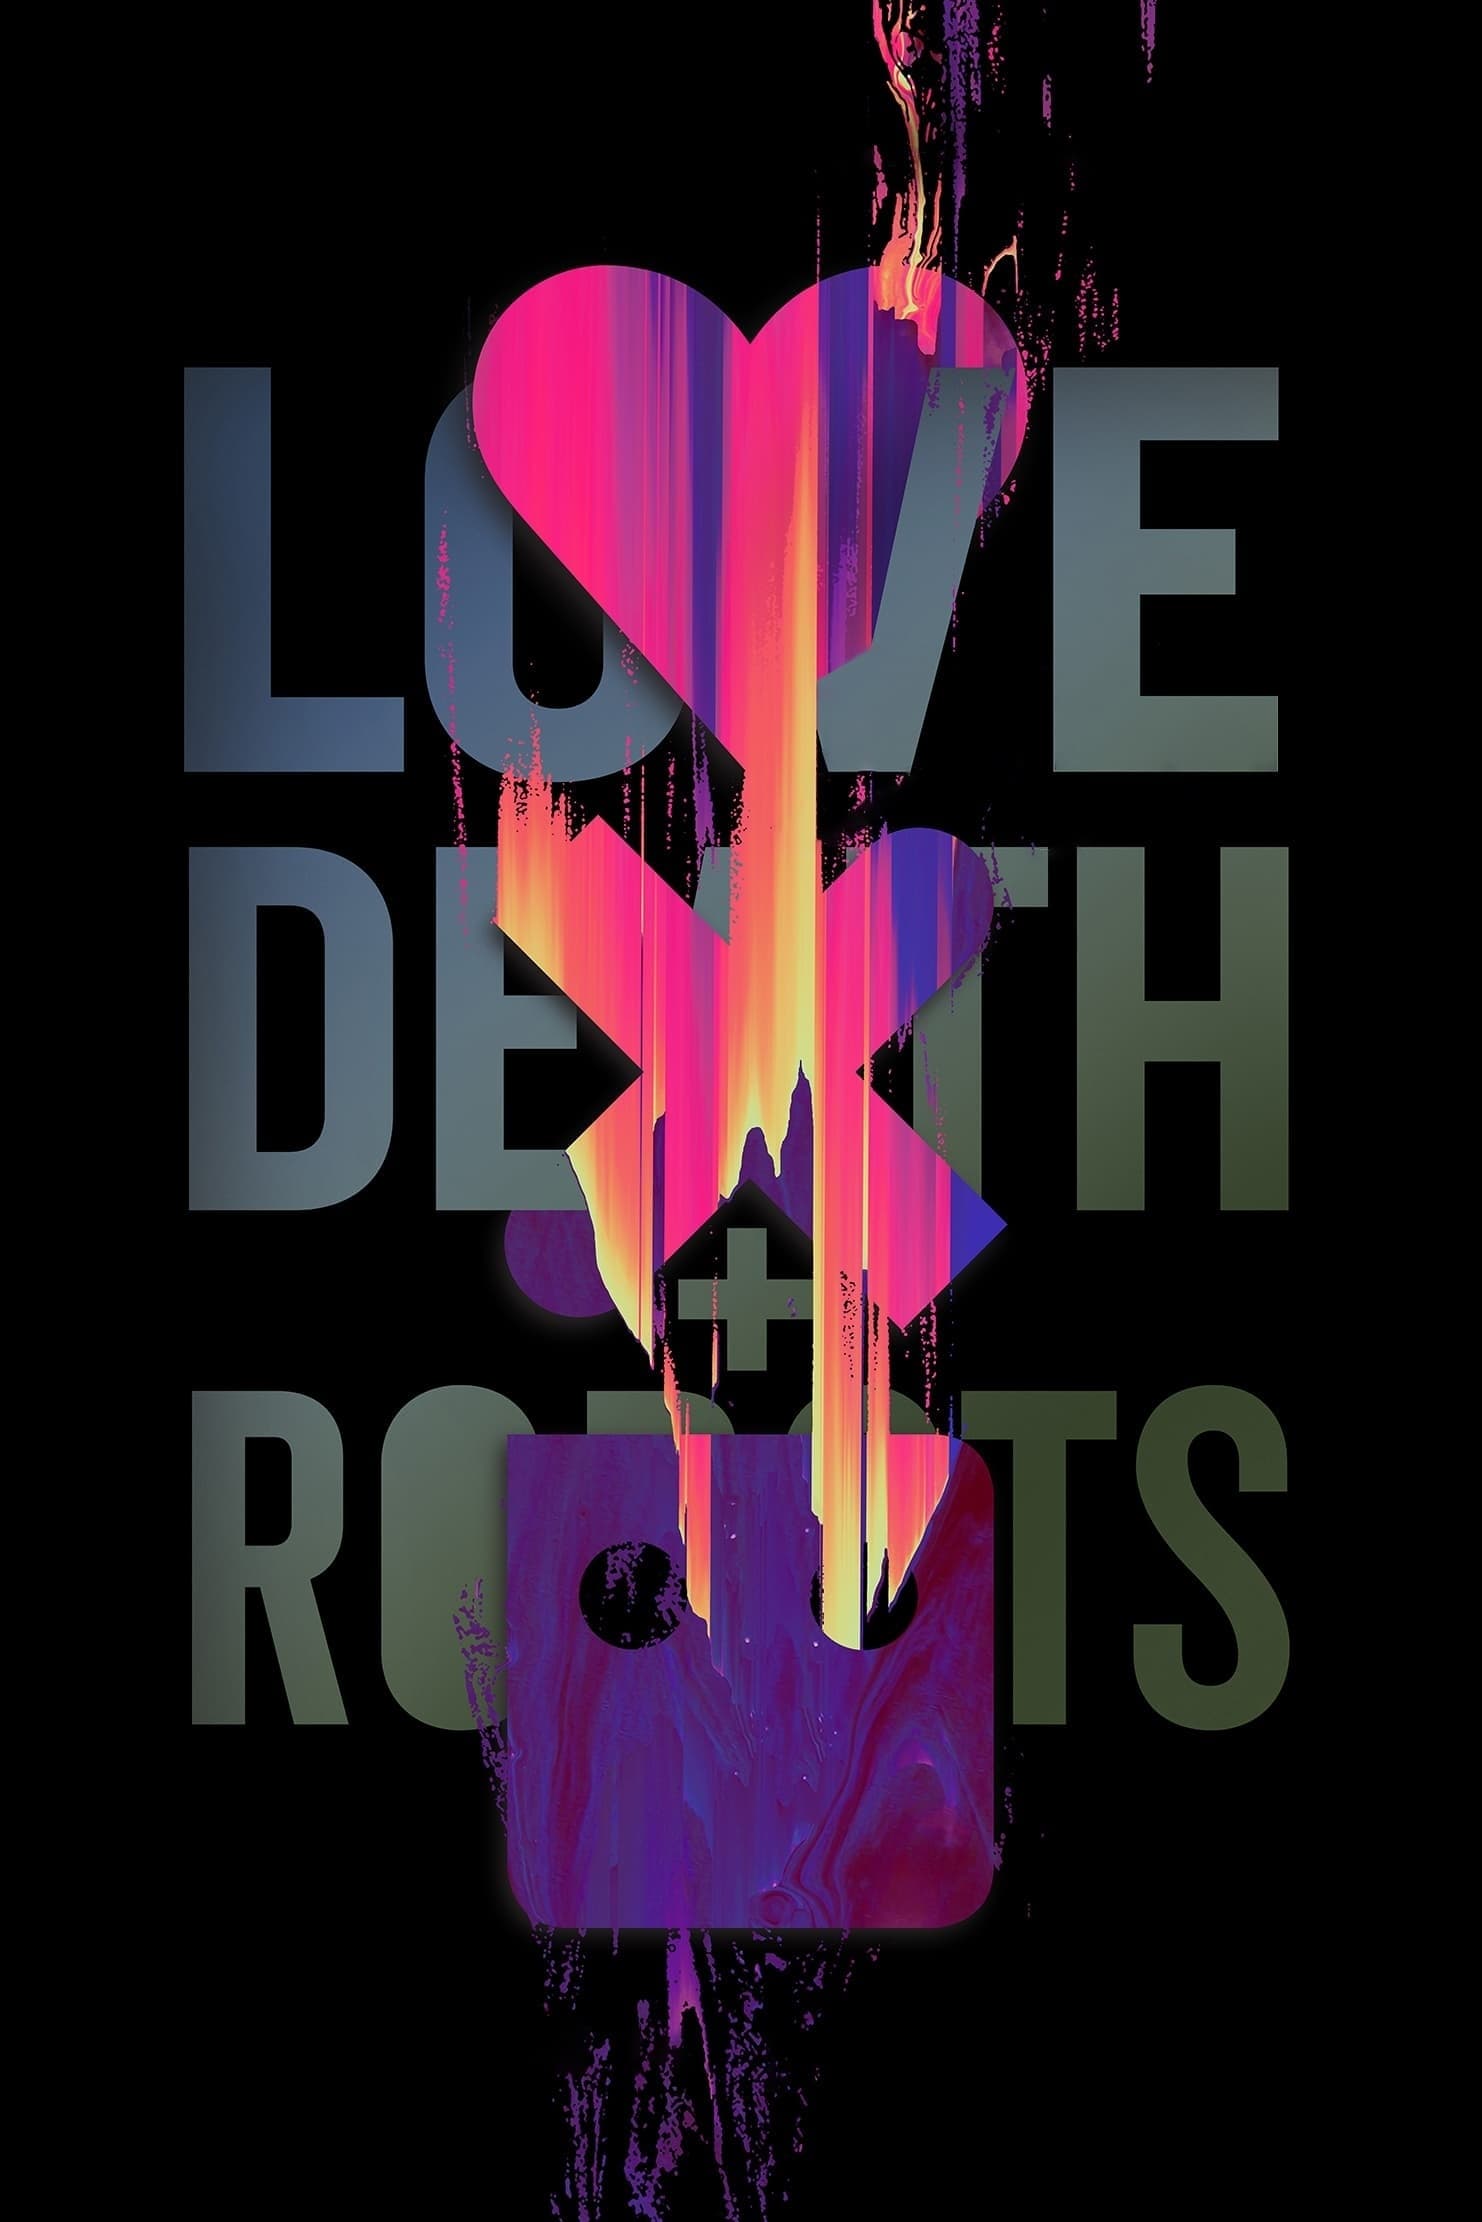 Love, Death + Robots (2019)